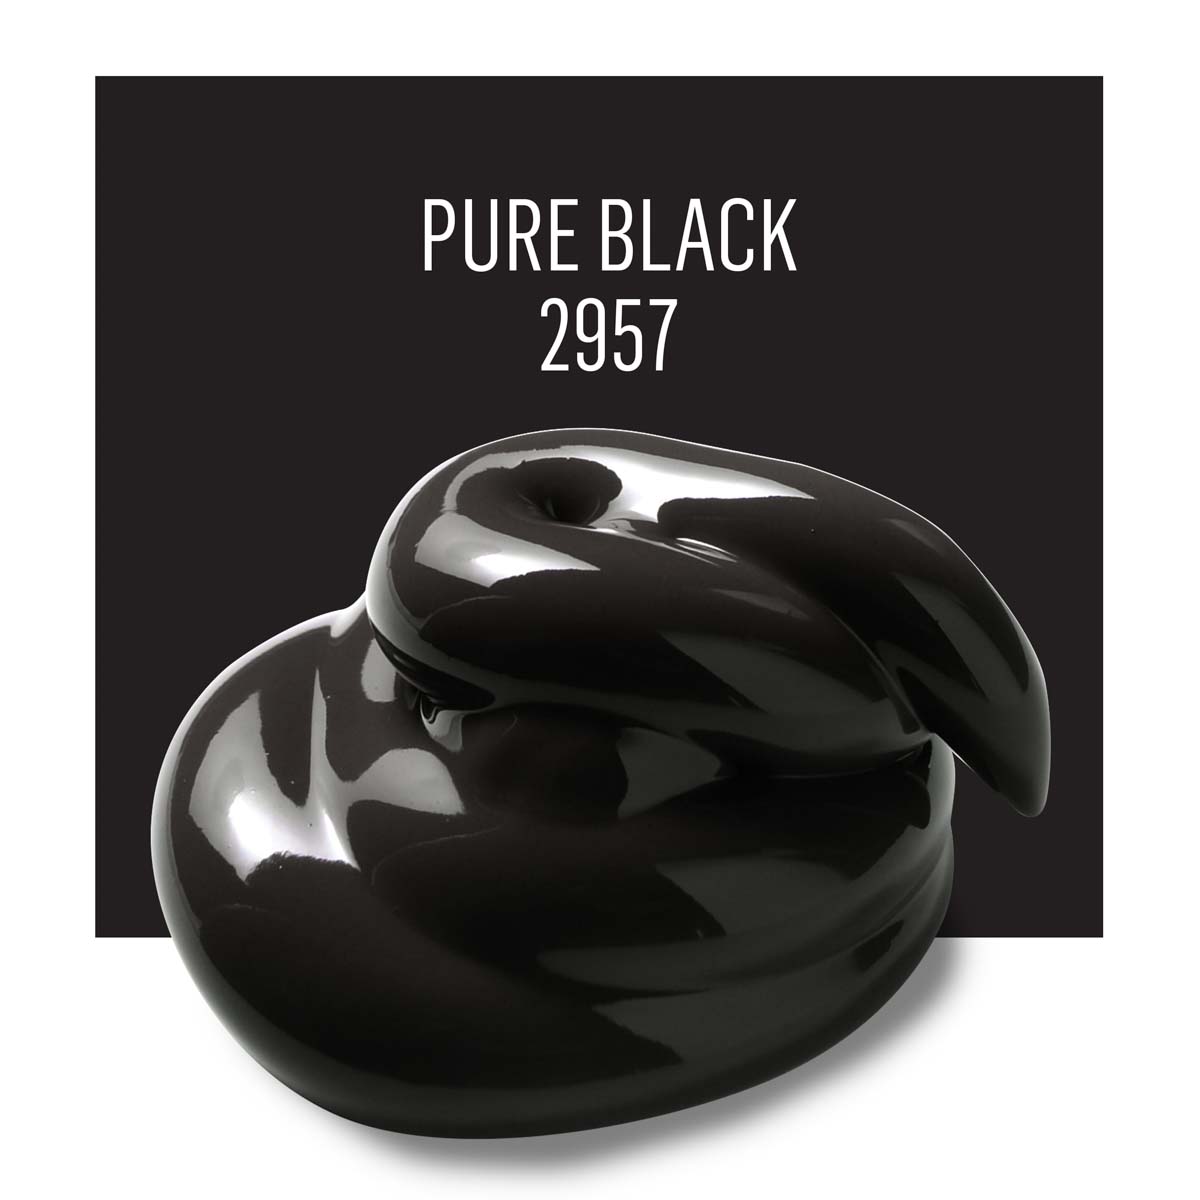 Shop Plaid FolkArt ® Acrylic Colors - Pure Black, 2 oz. - 479 - 479